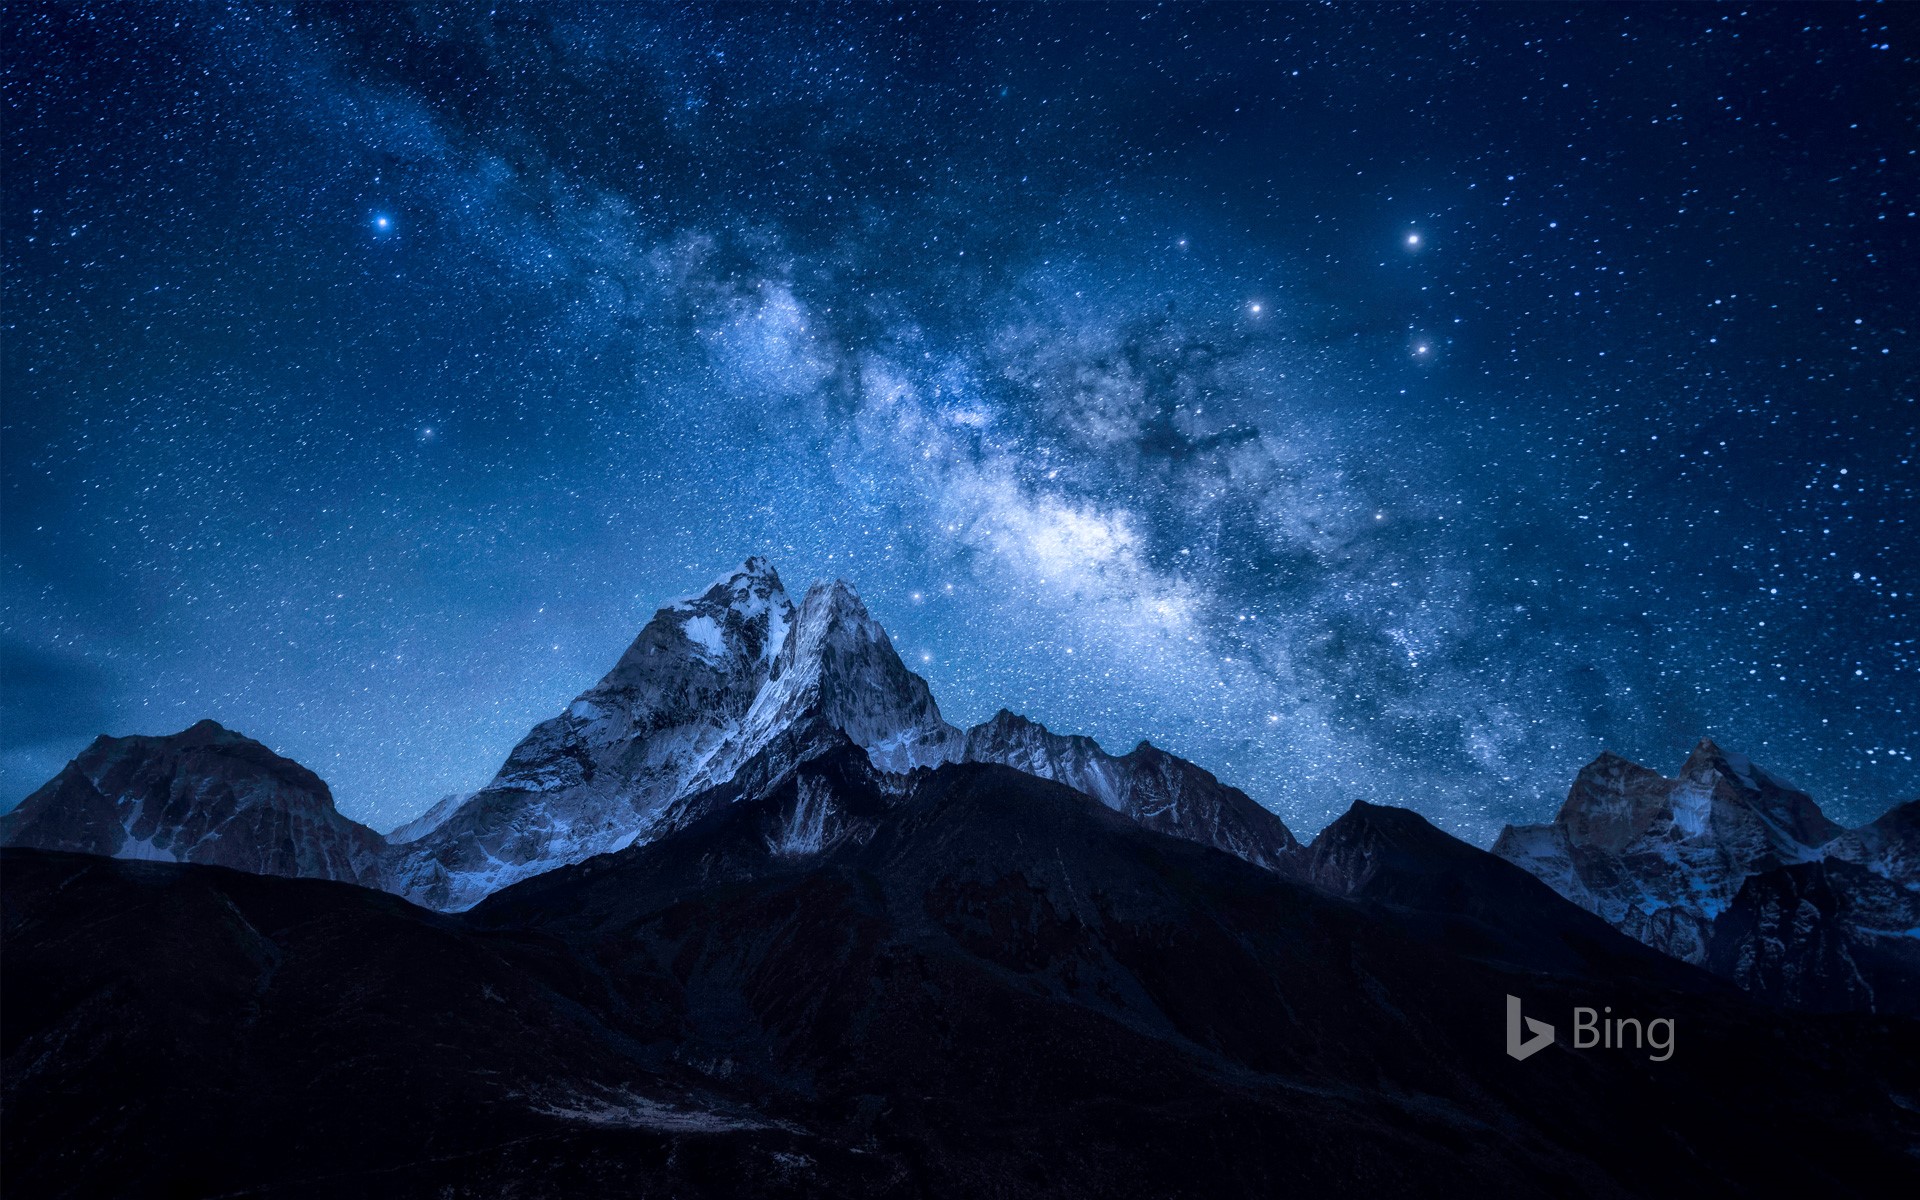 Milky Way over the Himalayan peak Ama Dablam in Nepal